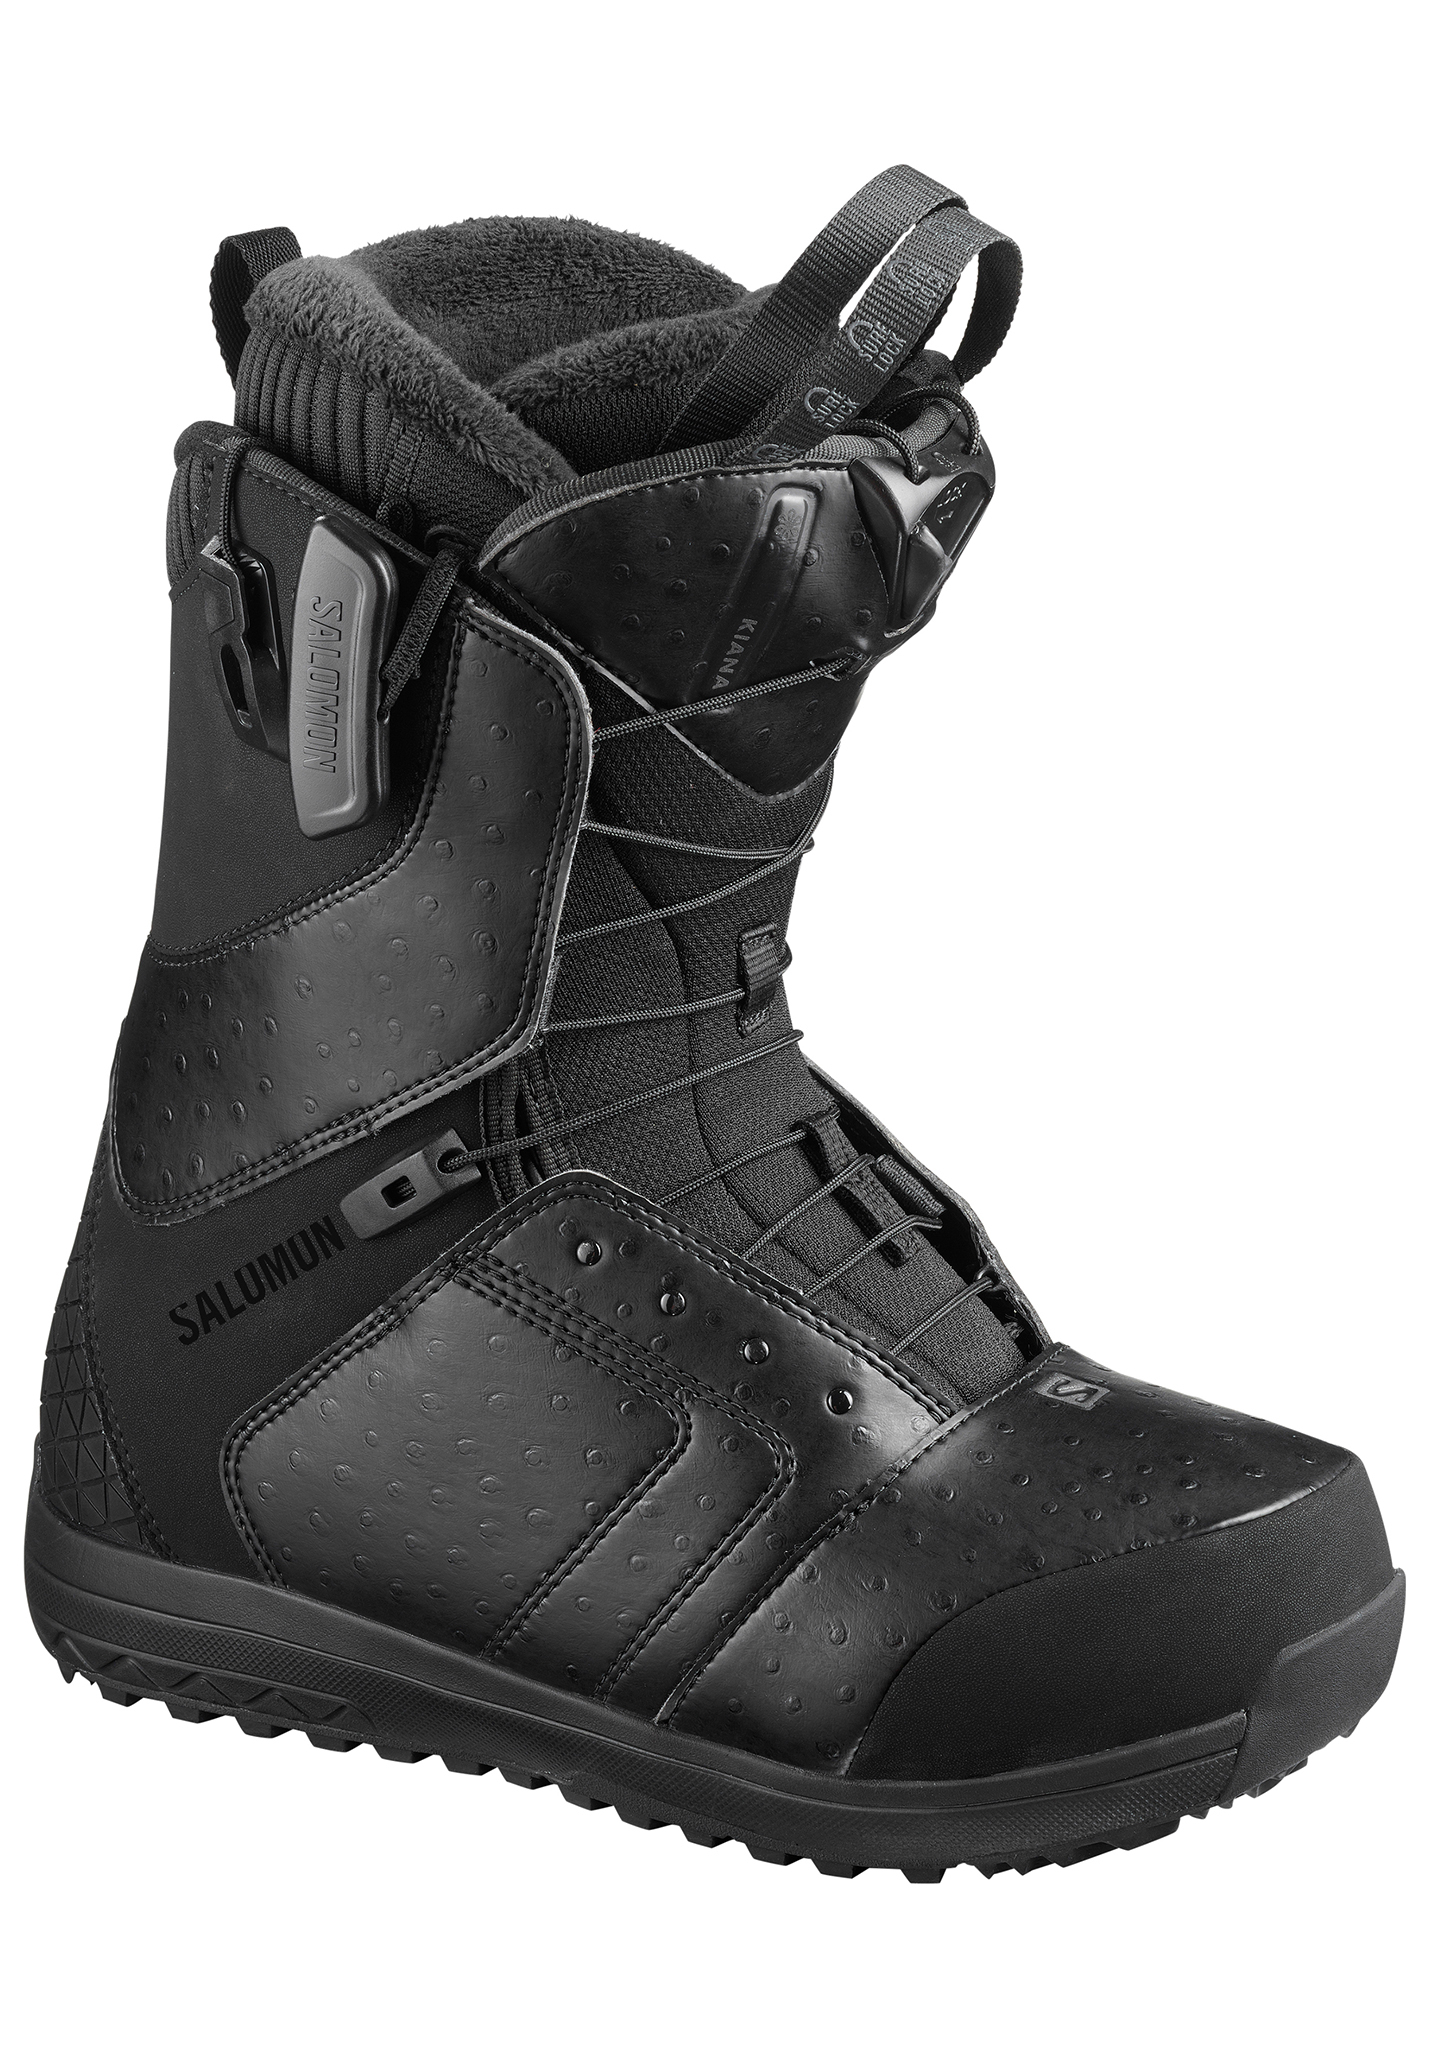 Salomon Kiana All Mountain Snowboard Boots schwarz/schwarz/schwarz 39